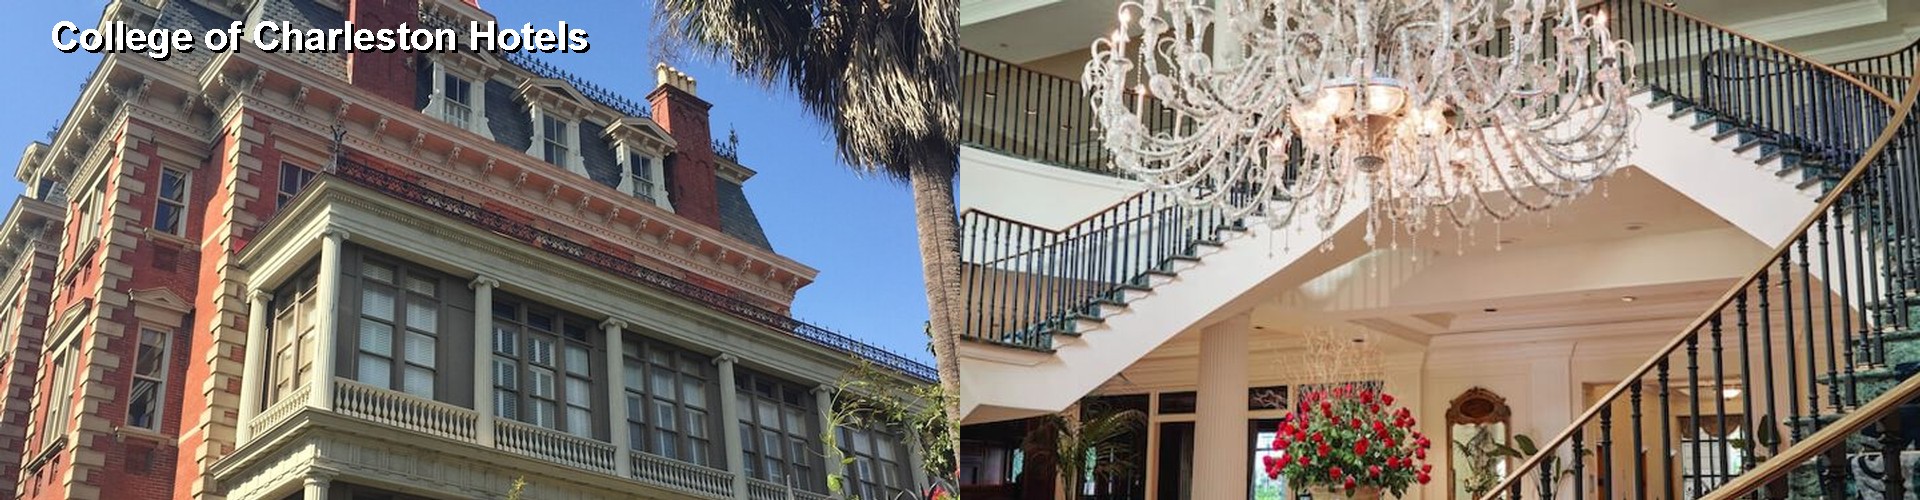 5 Best Hotels near College of Charleston